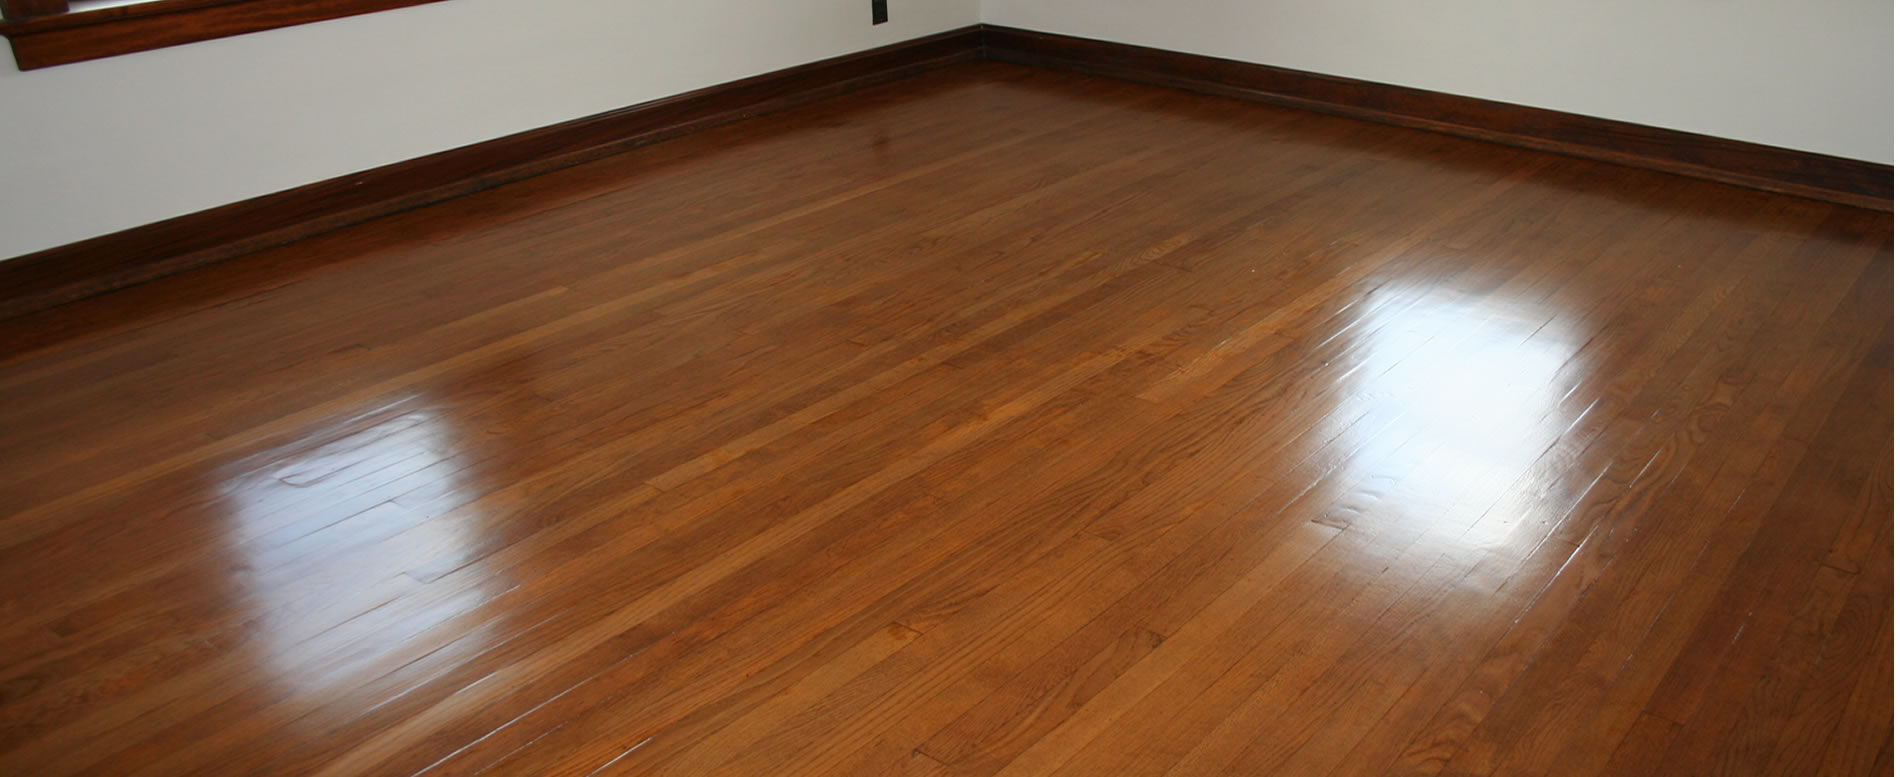 Wood Floor Hardwood Sandless, Best Polish For Wooden Floors Australia